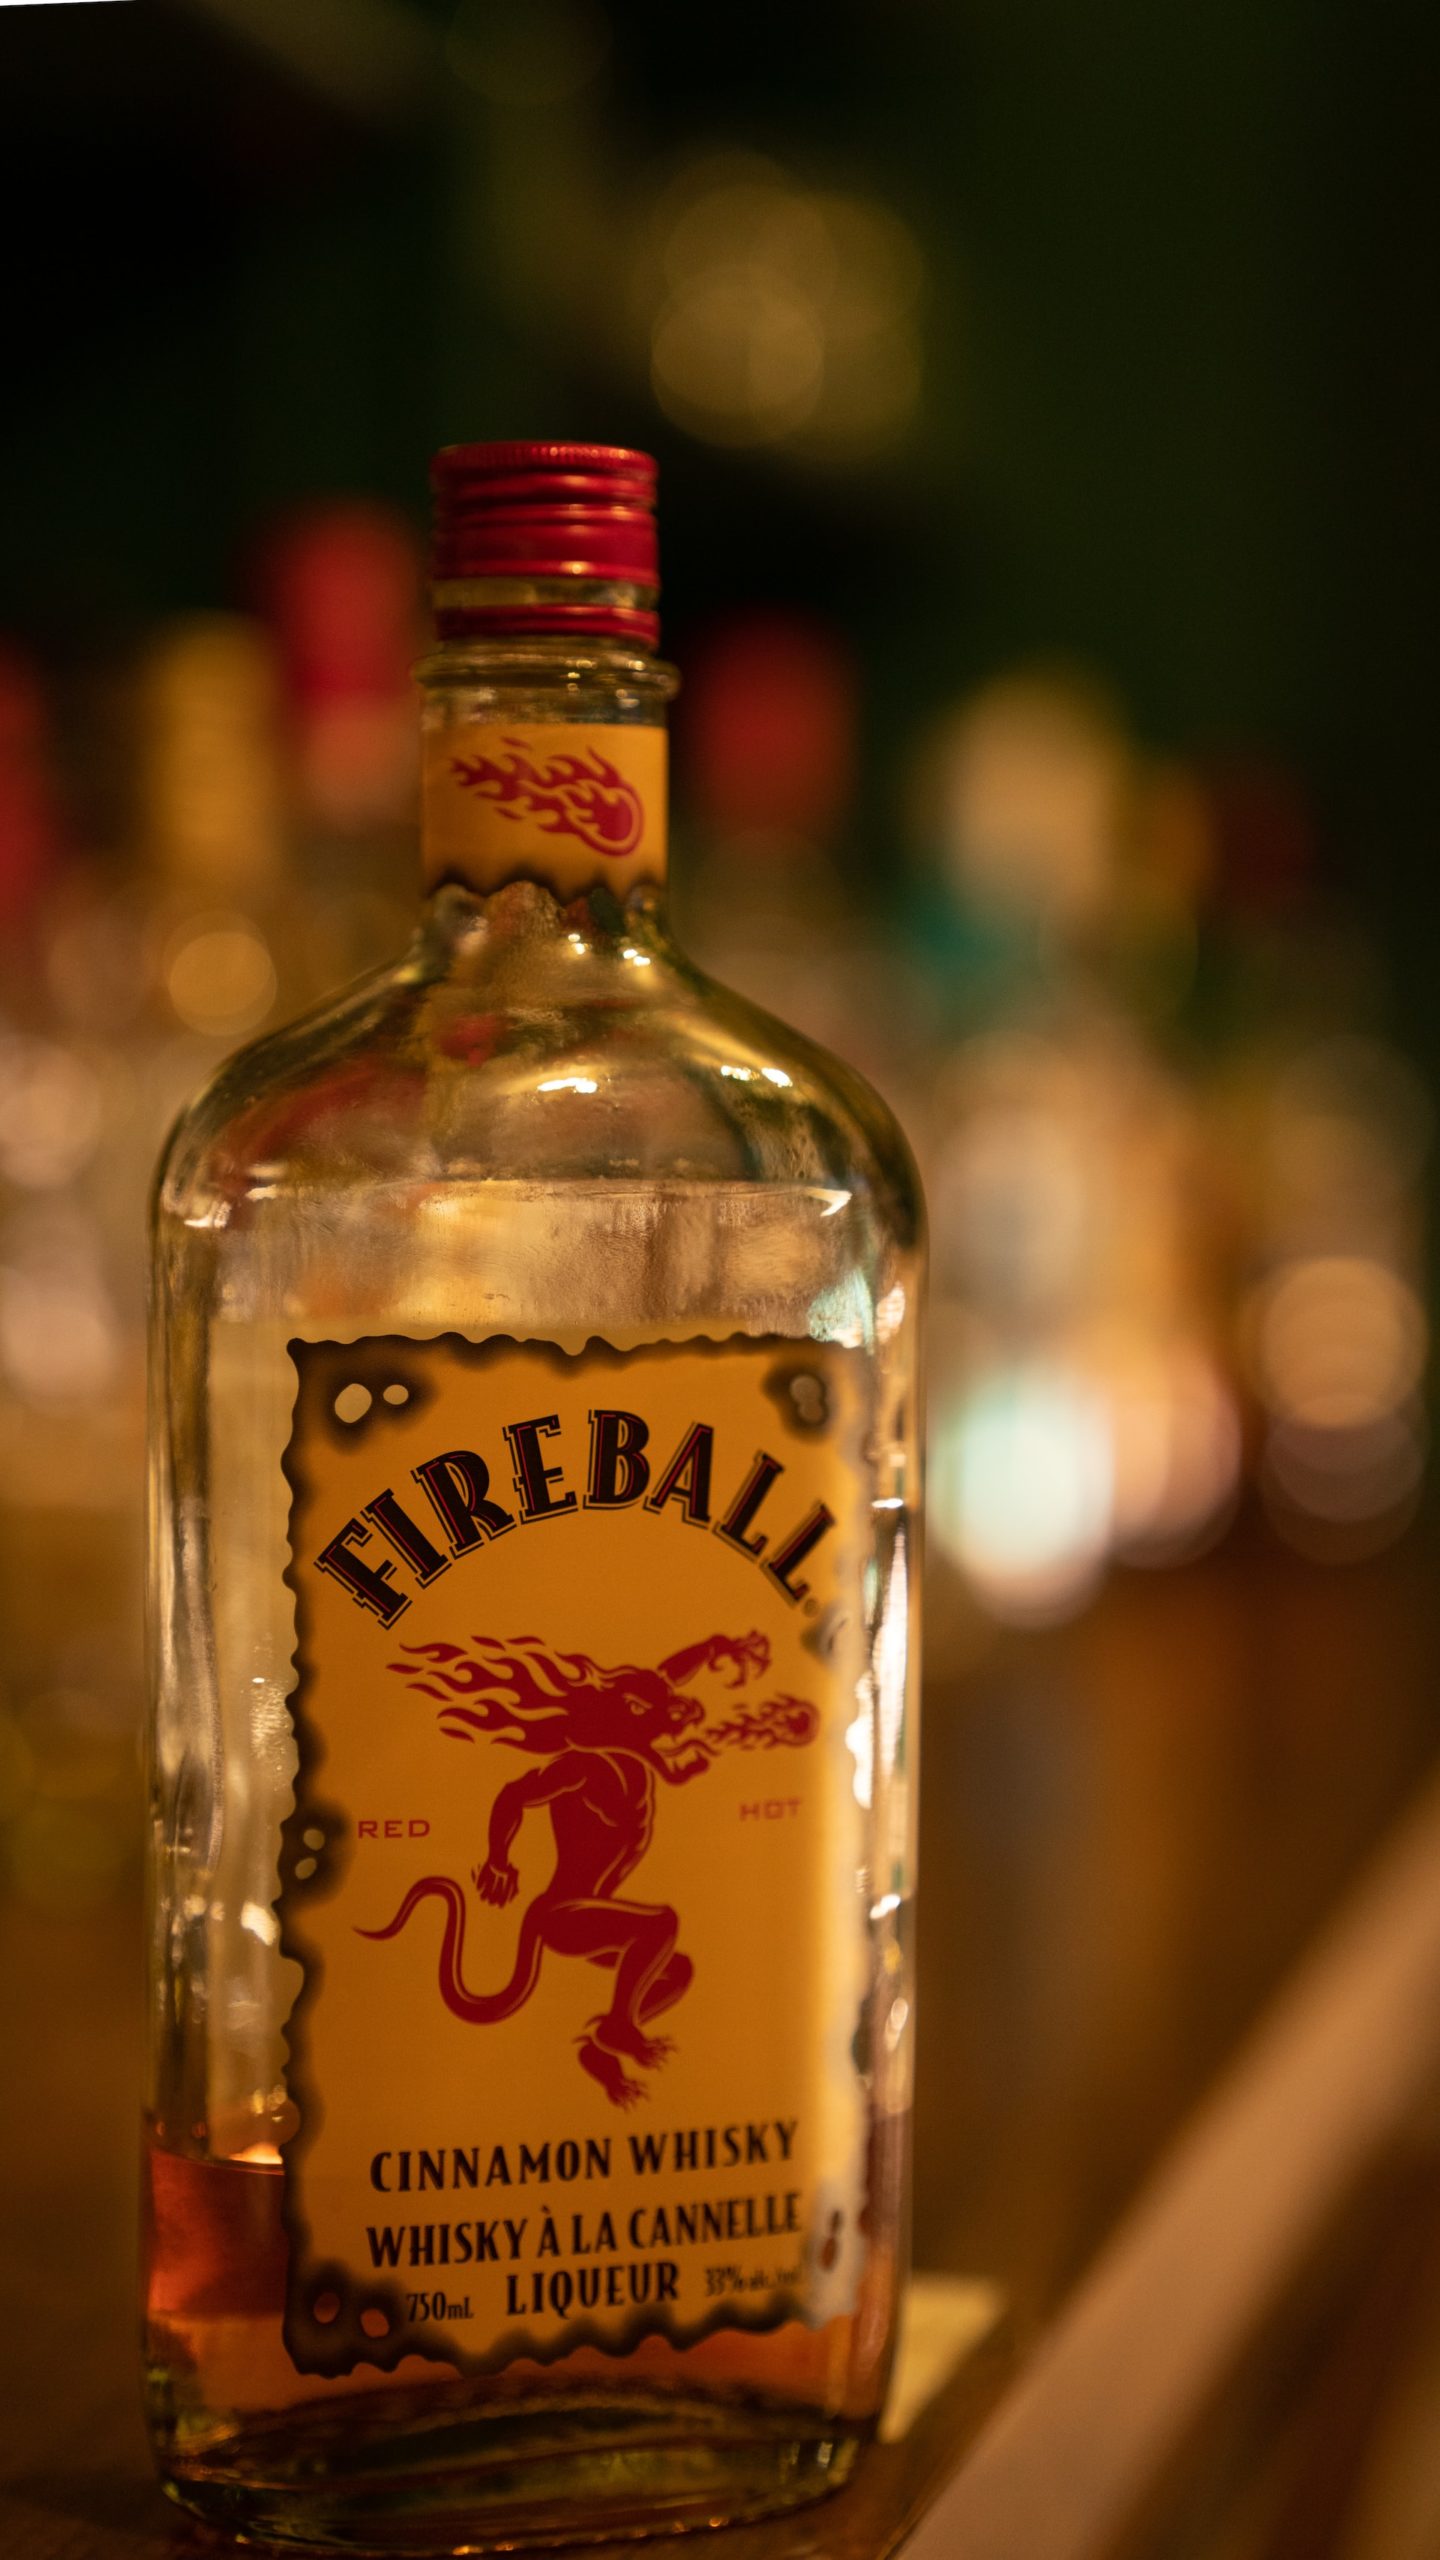 A bottle of Fireball Cinnamon Whiskey on a bar